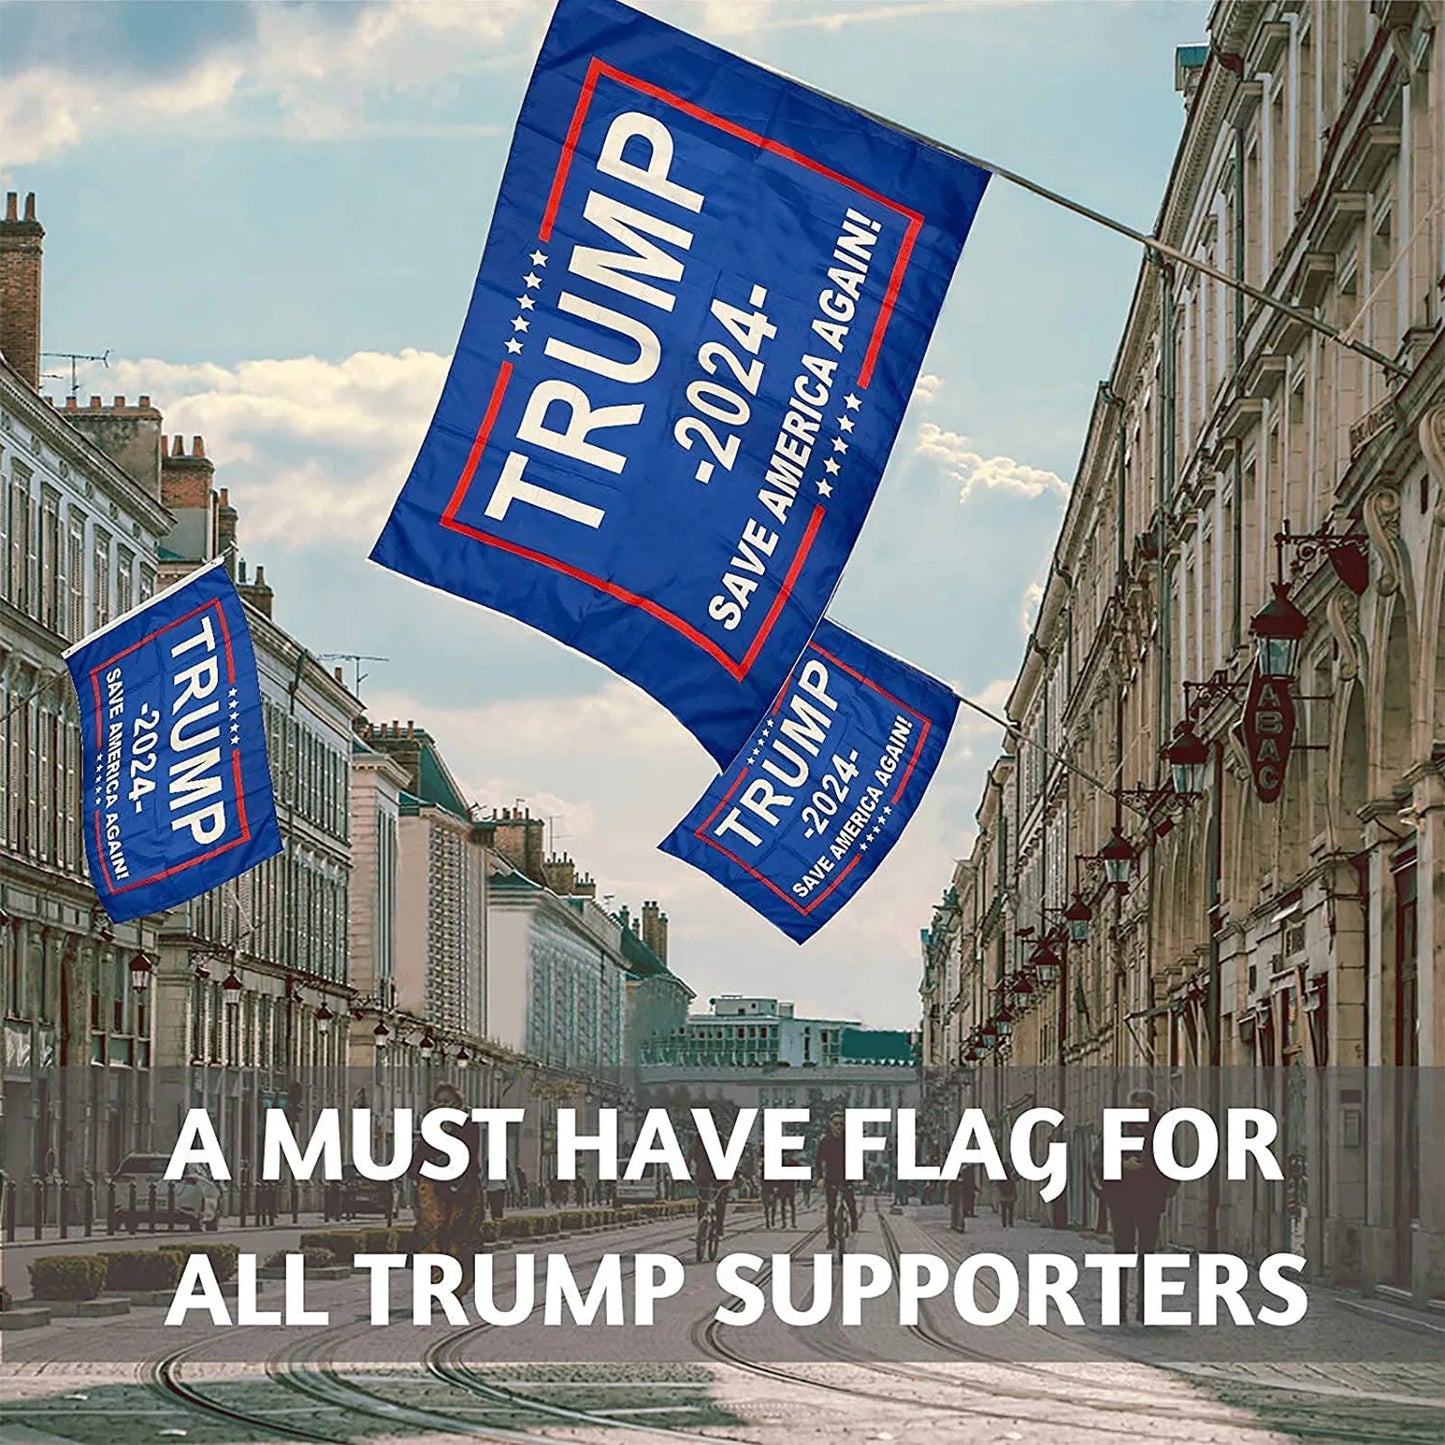 150*90cm 2024 Trump President USA Flag Take America Back Save America Again Keep US Great No More Bullshit Banner